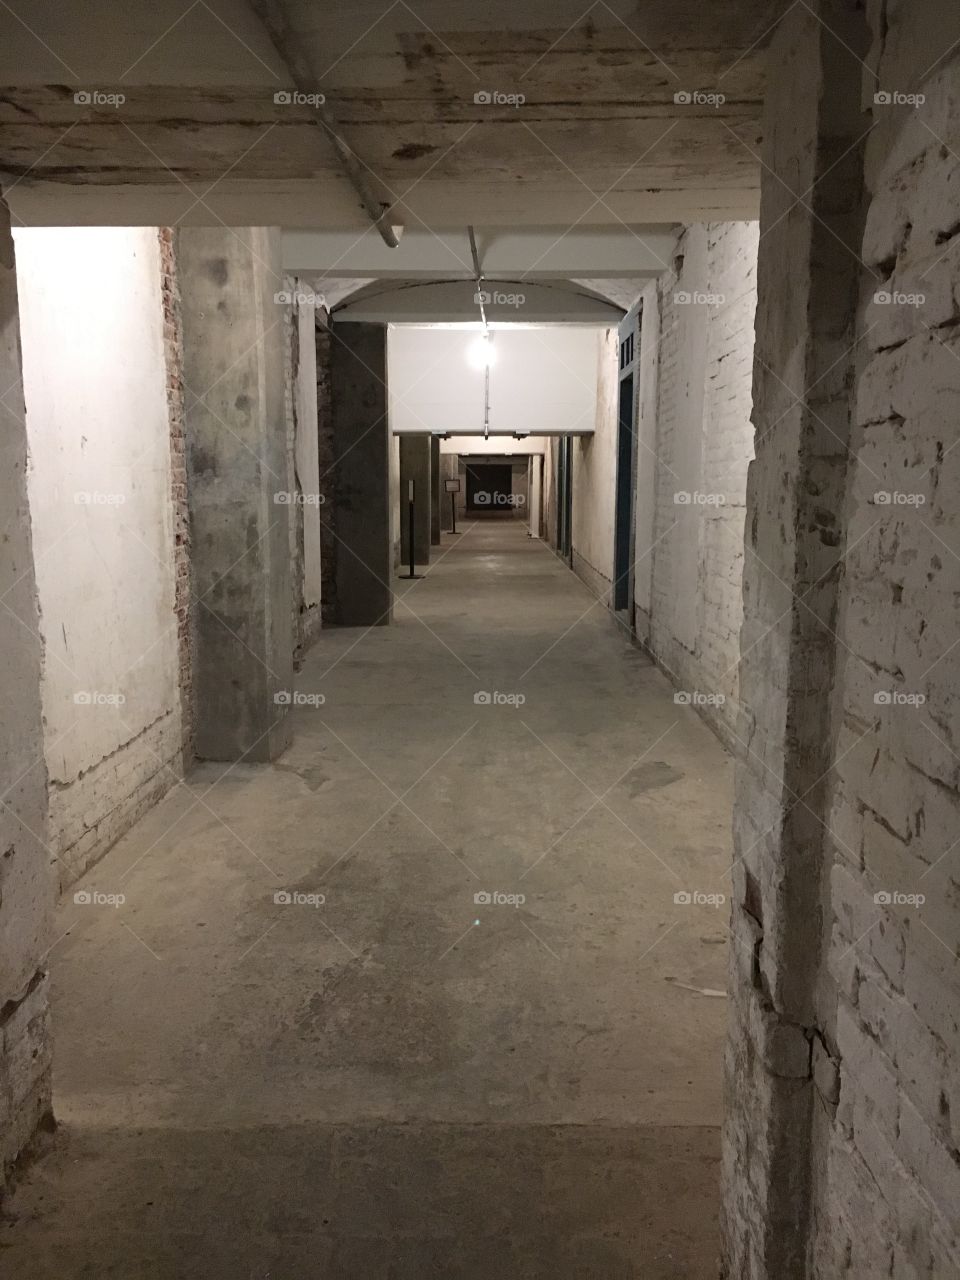 Old basement hall of a jail, walls crumbling, lights hanging, no color and creepy